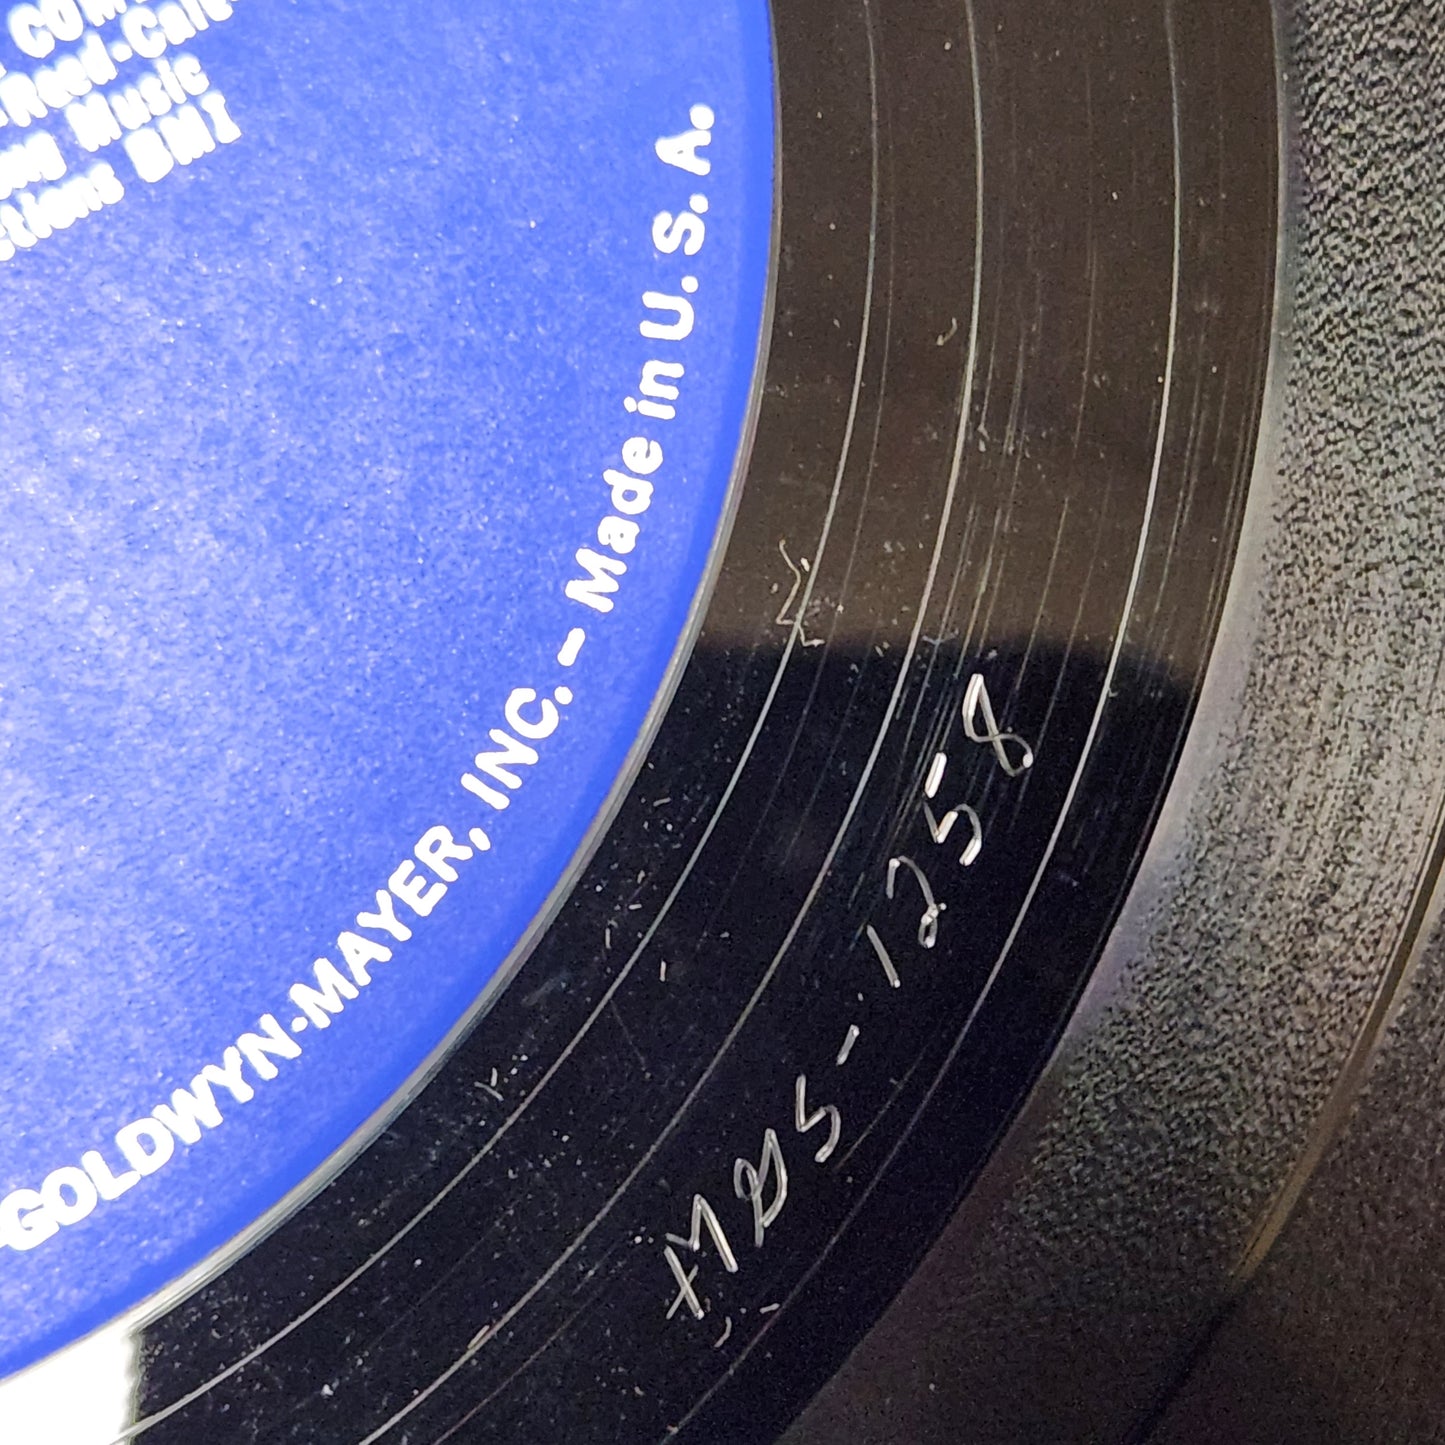 Vevlet Underground "White Light / White Heat" Original 1968 US Pressing Record Album